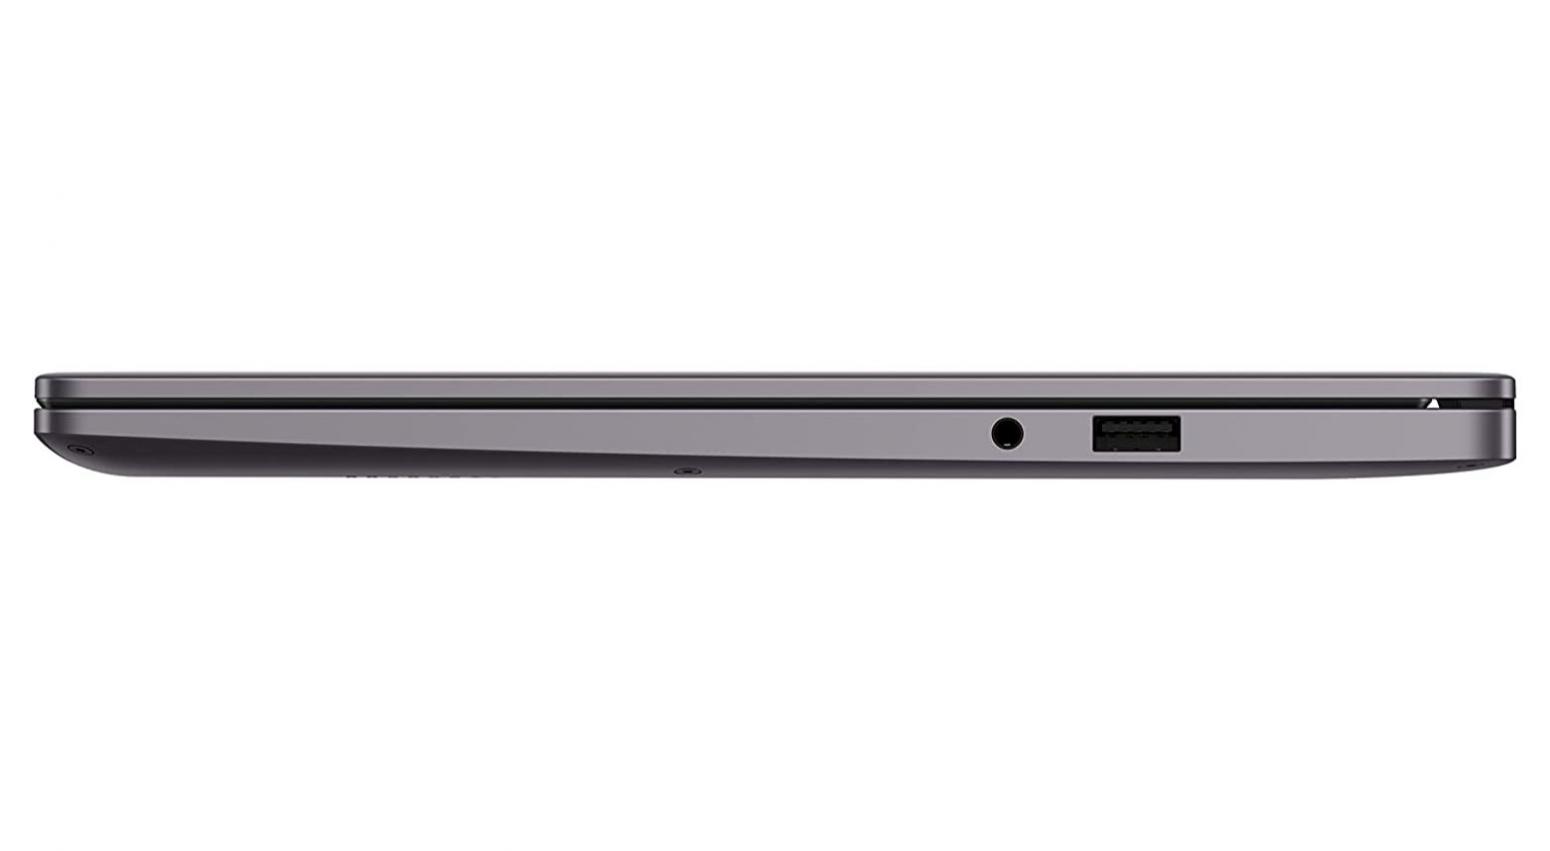 Ordinateur portable Huawei MateBook B3-410 2020 Gris - Core i5, 8 Go, 512 Go, Pro - photo 4